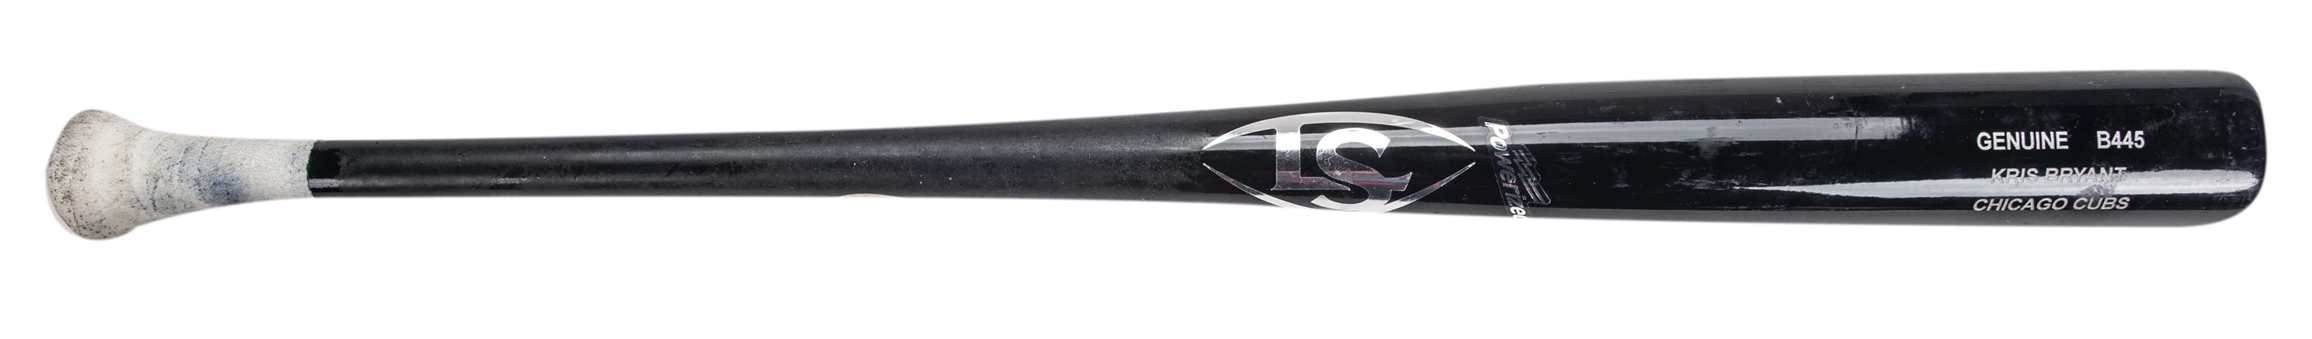 2018 Kris Bryant Chicago Cubs Game Used Louisville Slugger B445 Model Bat (PSA/DNA GU 9)